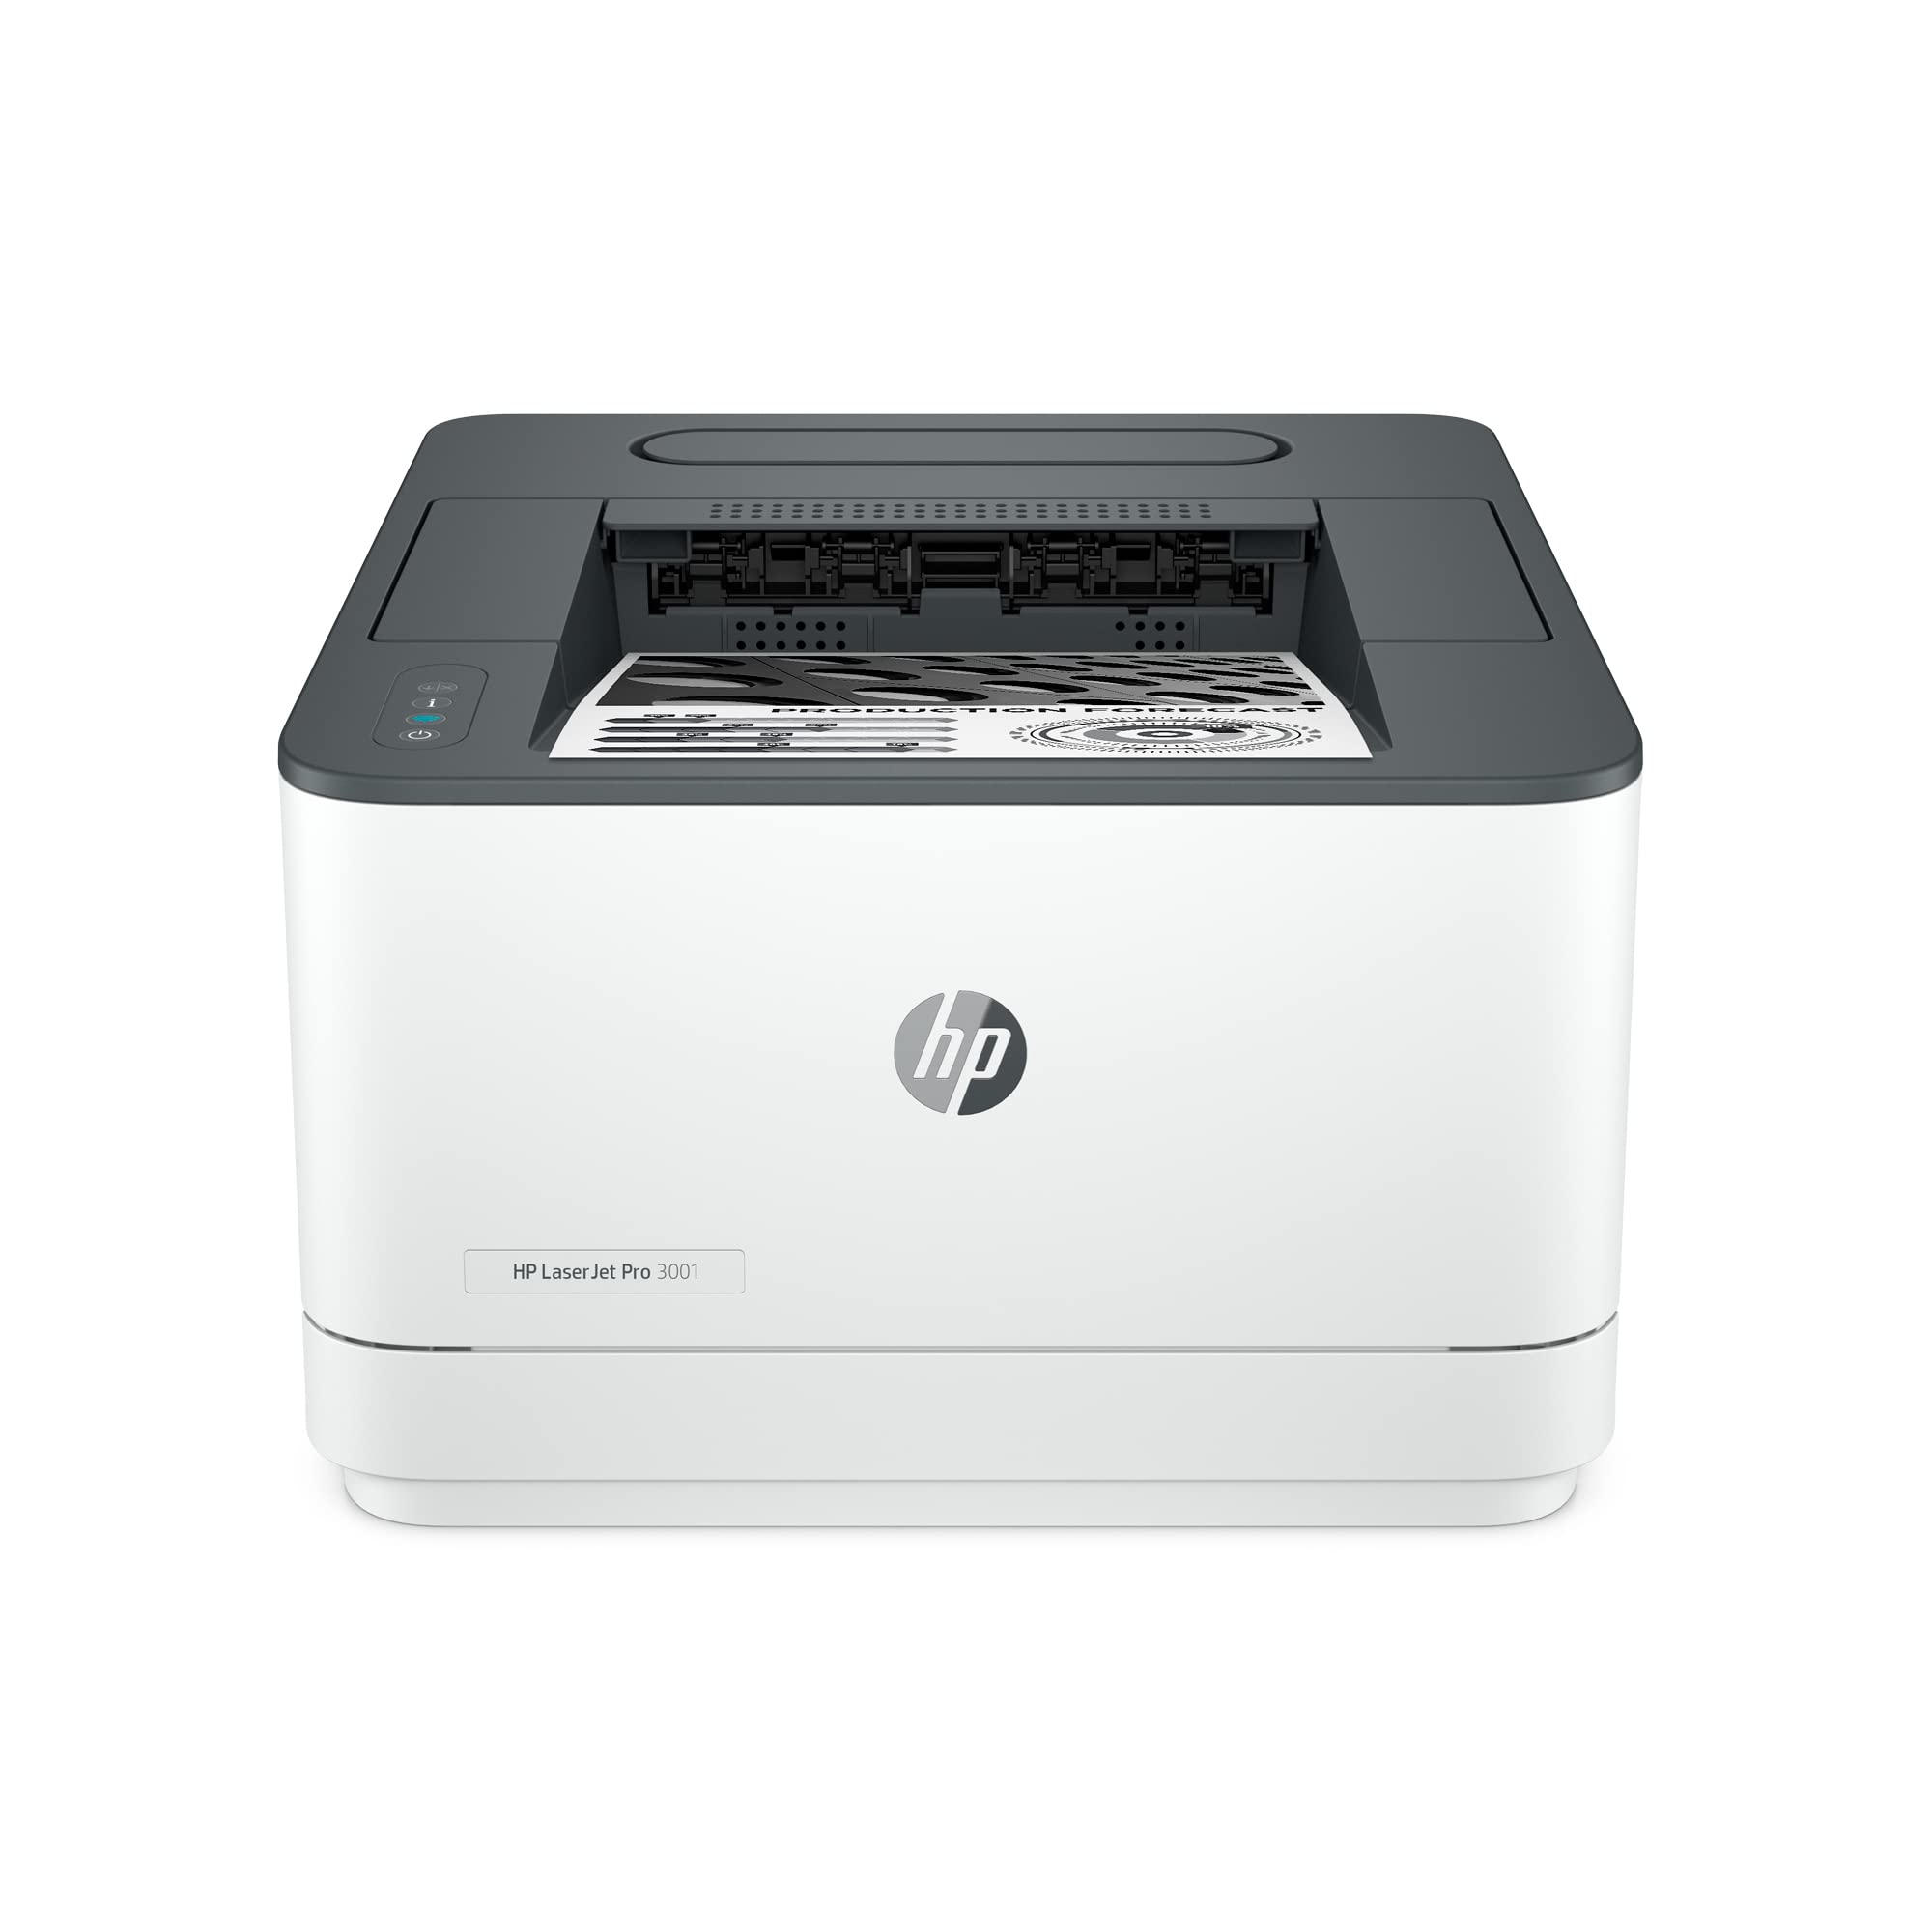 HP Laserjet Pro 4001ne Black & White Printer with + Smart Office Features